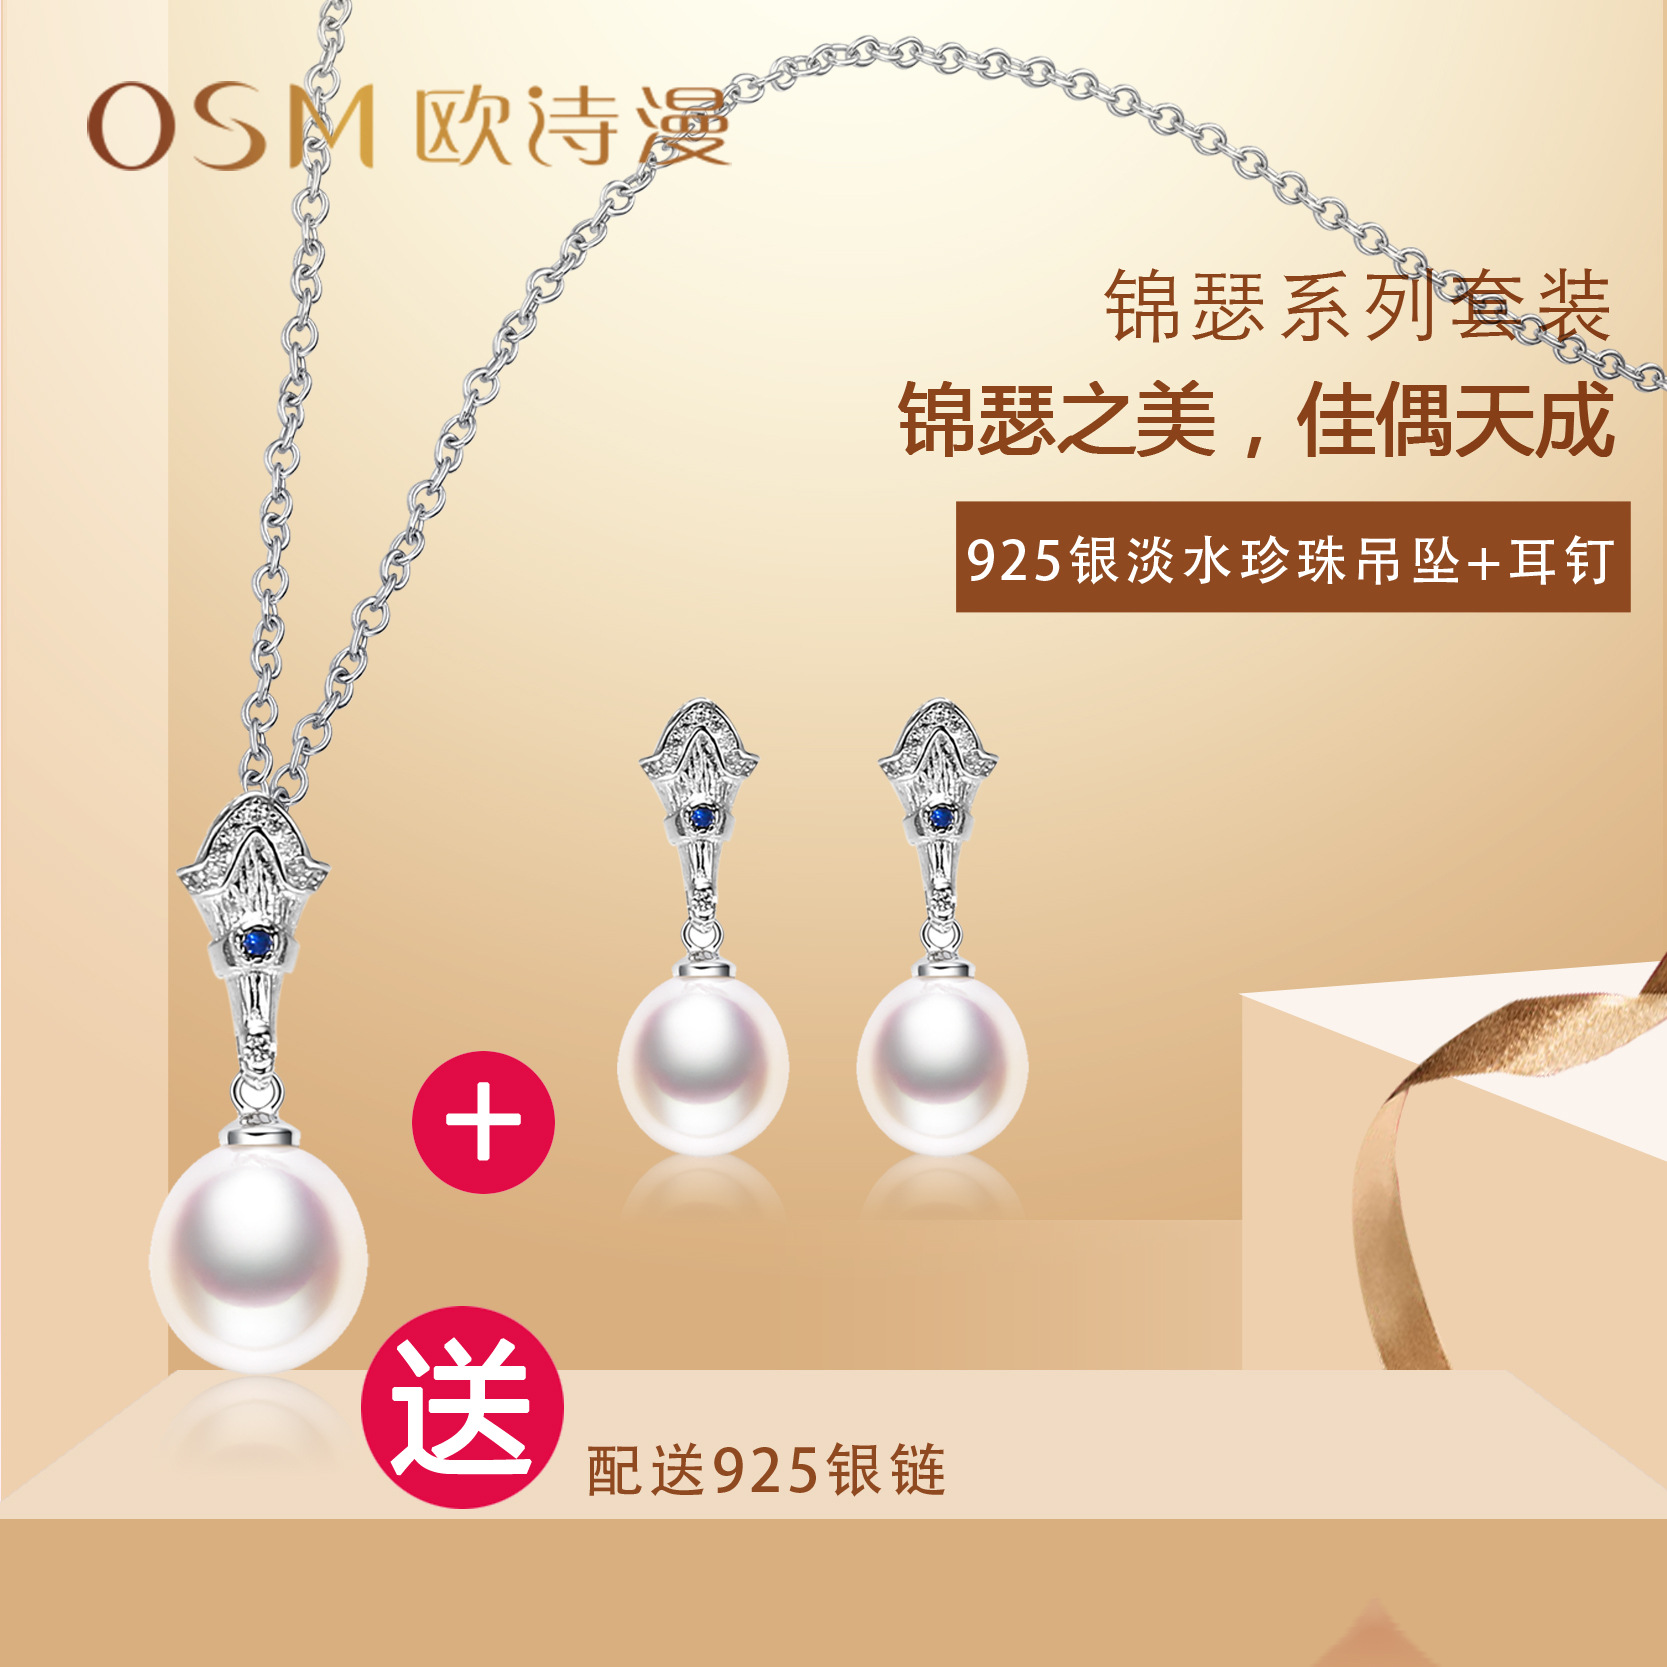 European Poetry Man Jin Se series silver 925 Freshwater pearls jewelry Pendant Ear Studs suit